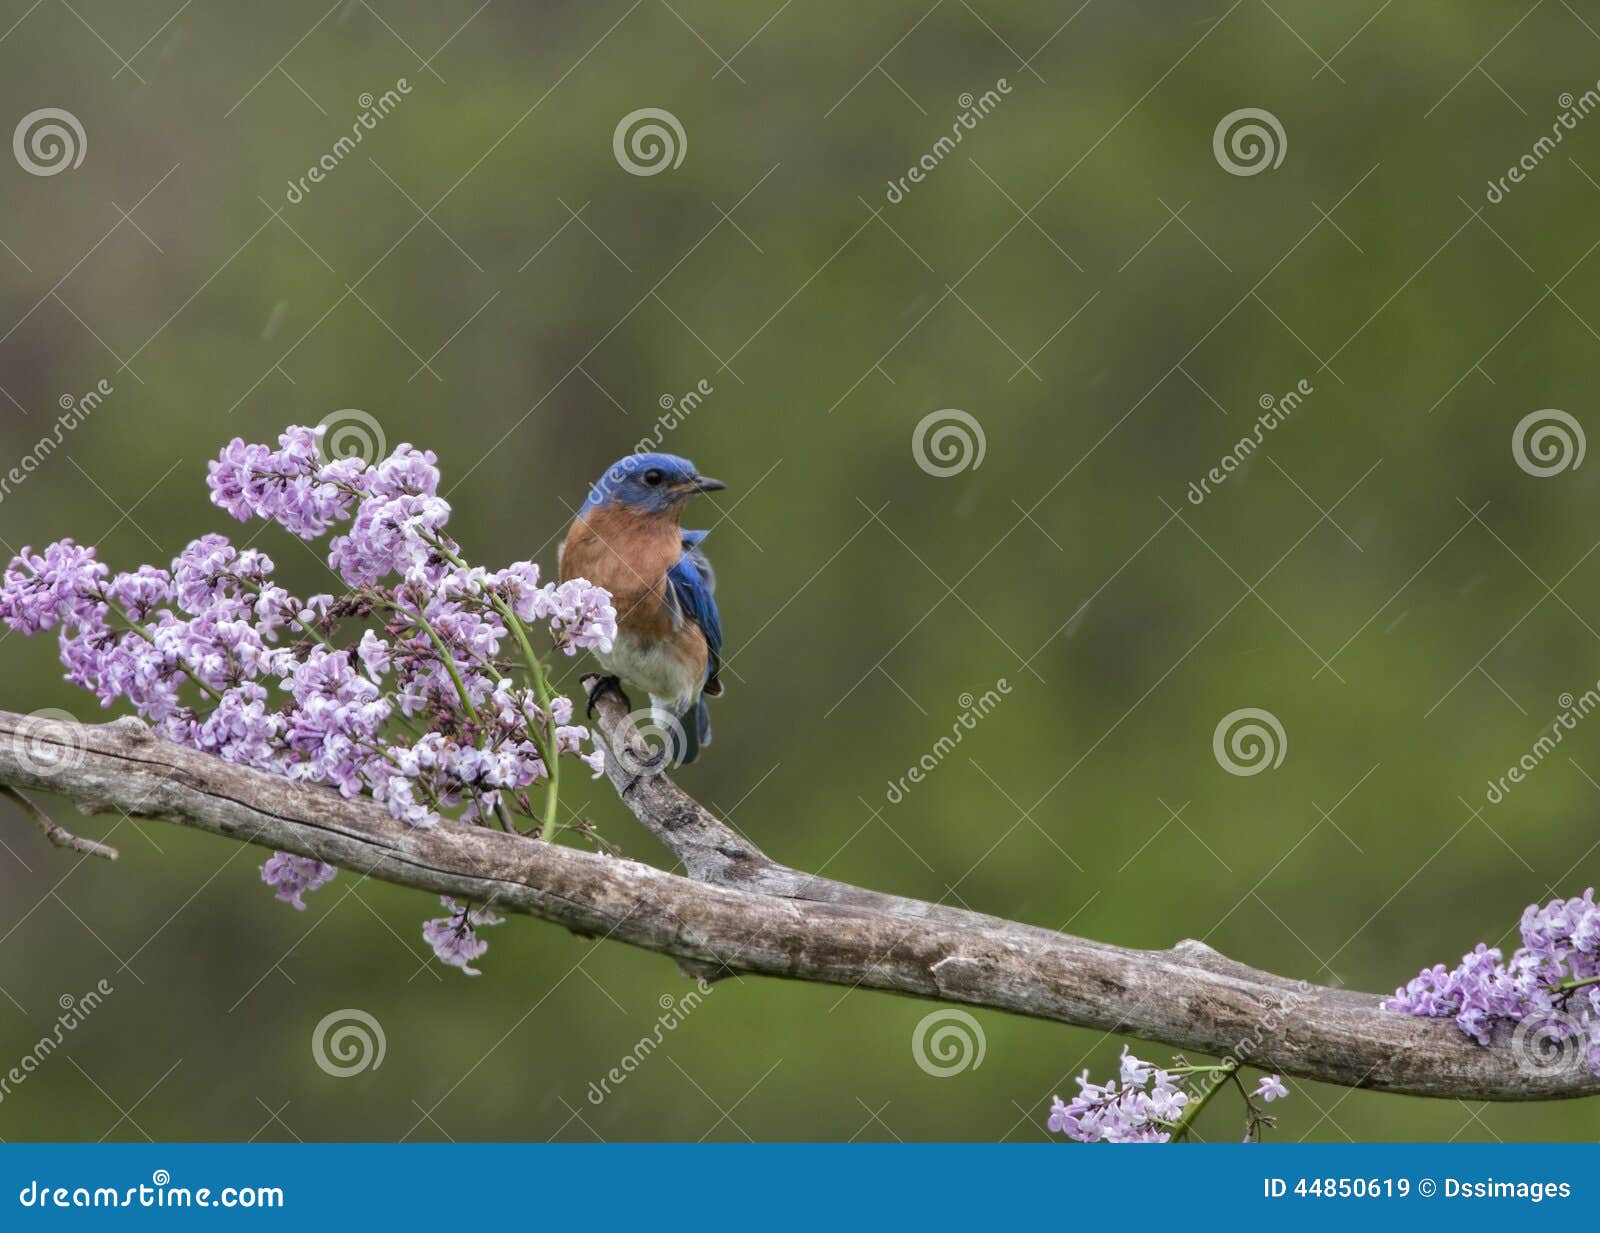 bluebird perched in lilacs in the rain